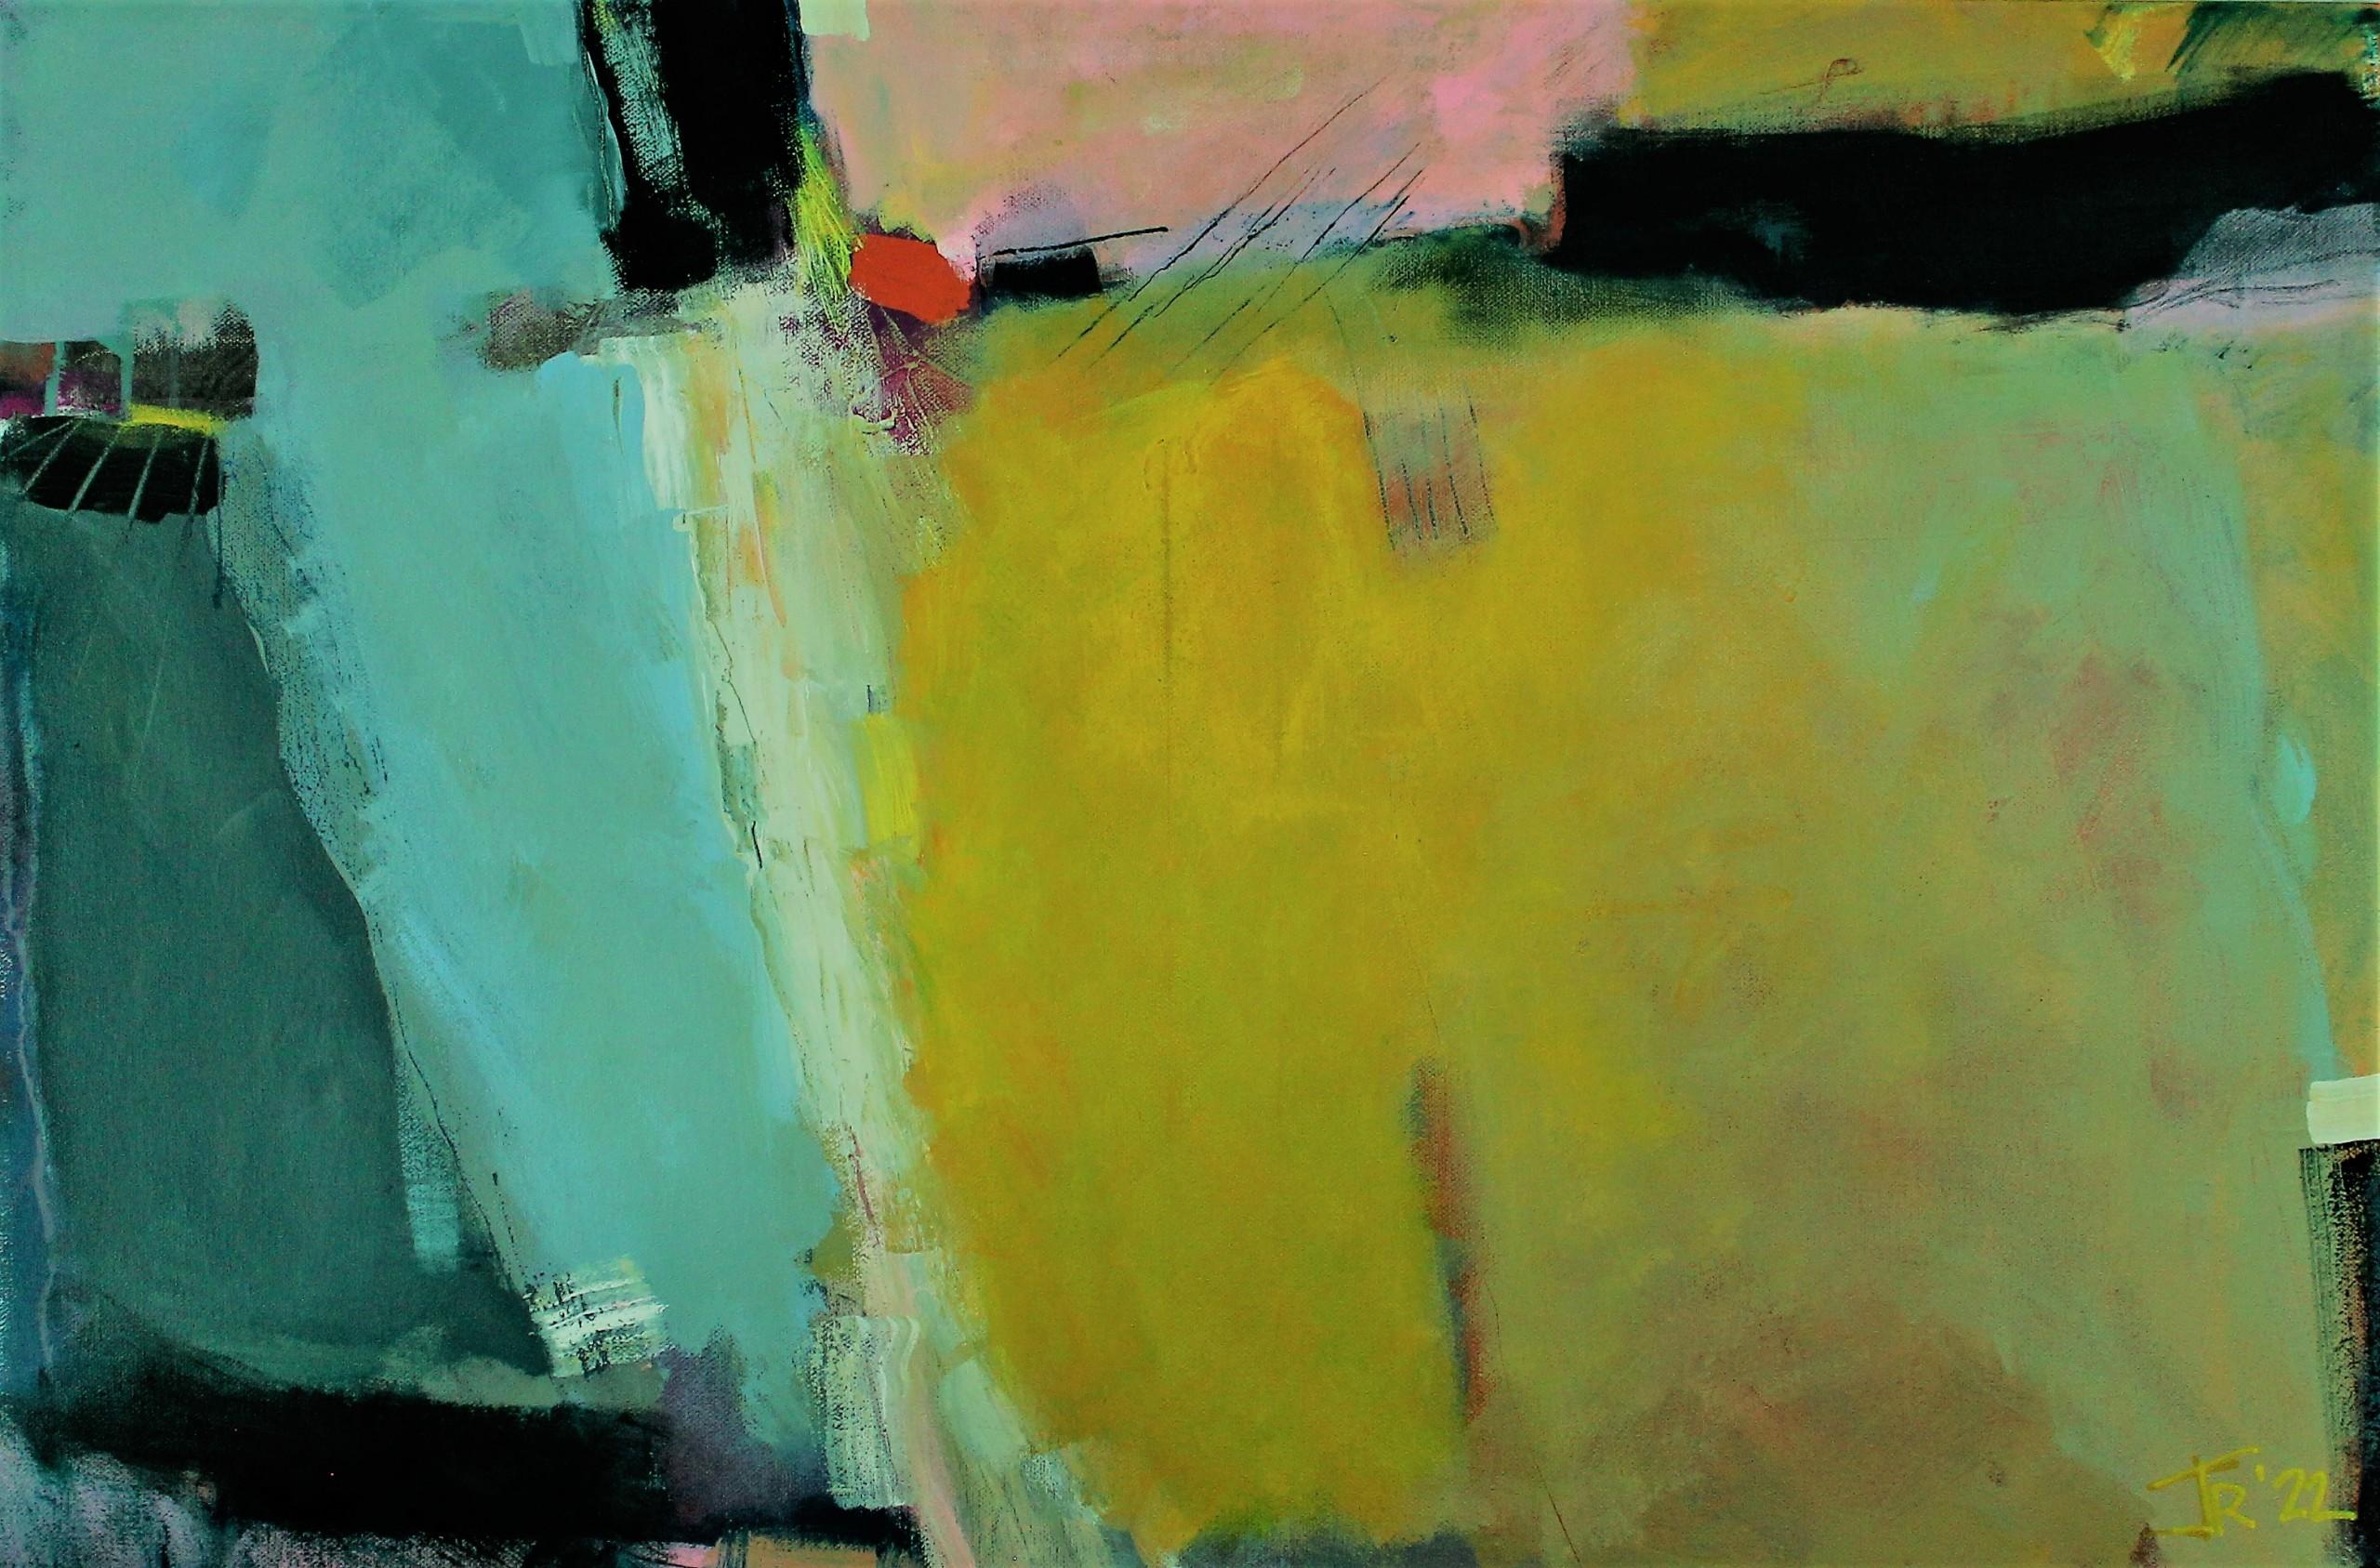 Jon Rowland  Abstract Painting - Estuary #3 by Jon Rowland, Abstract painting, Abstract expressionism, Landscape 